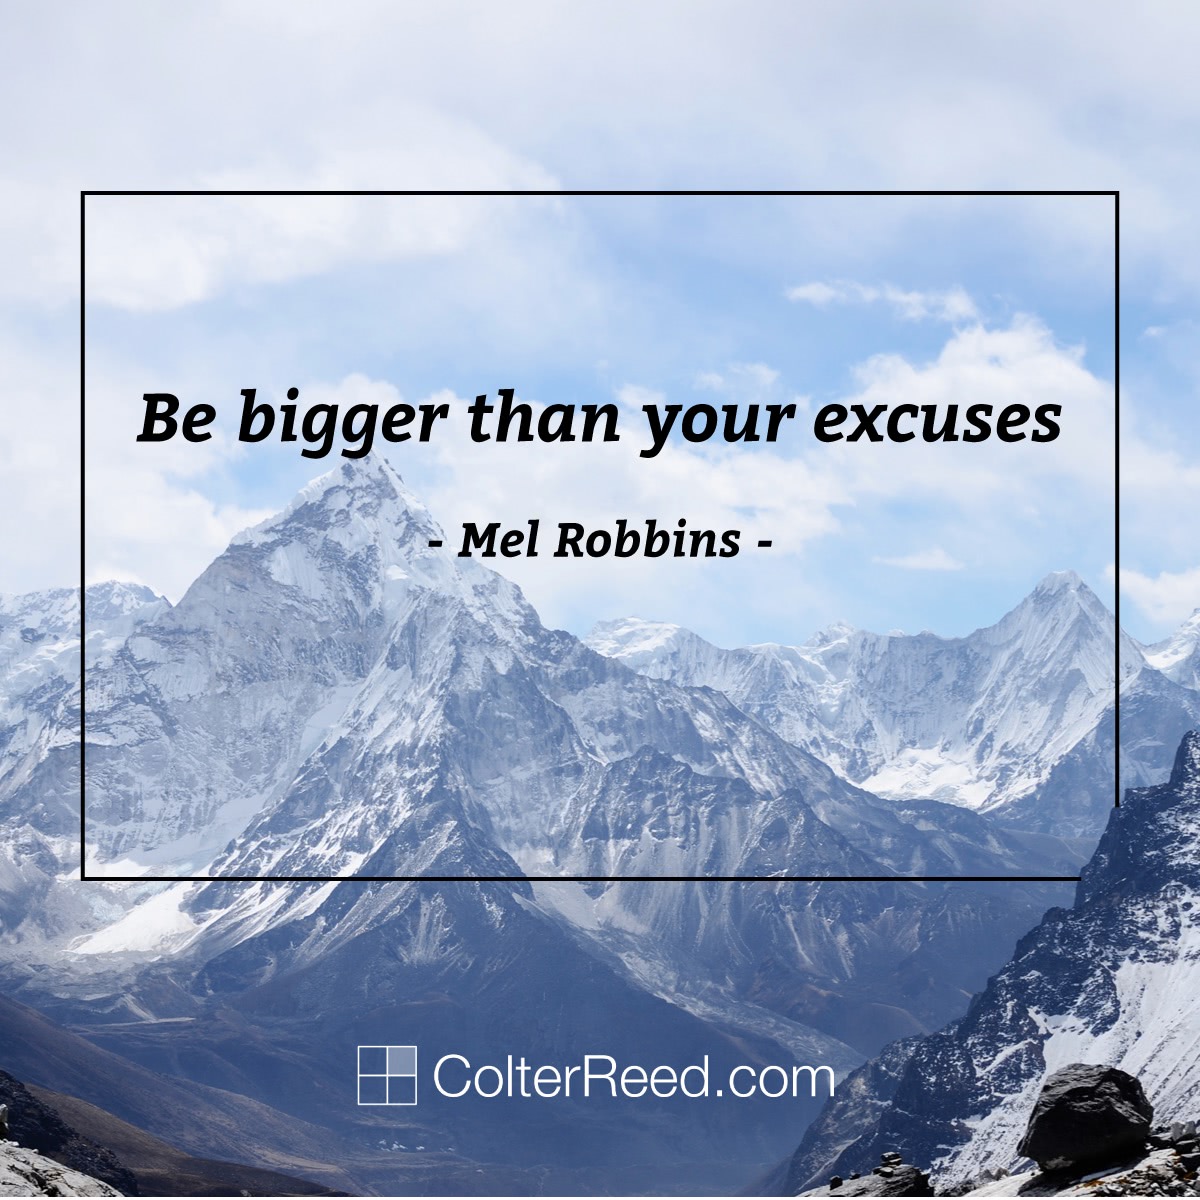 “Be bigger than your excuses.” —Mel Robbins